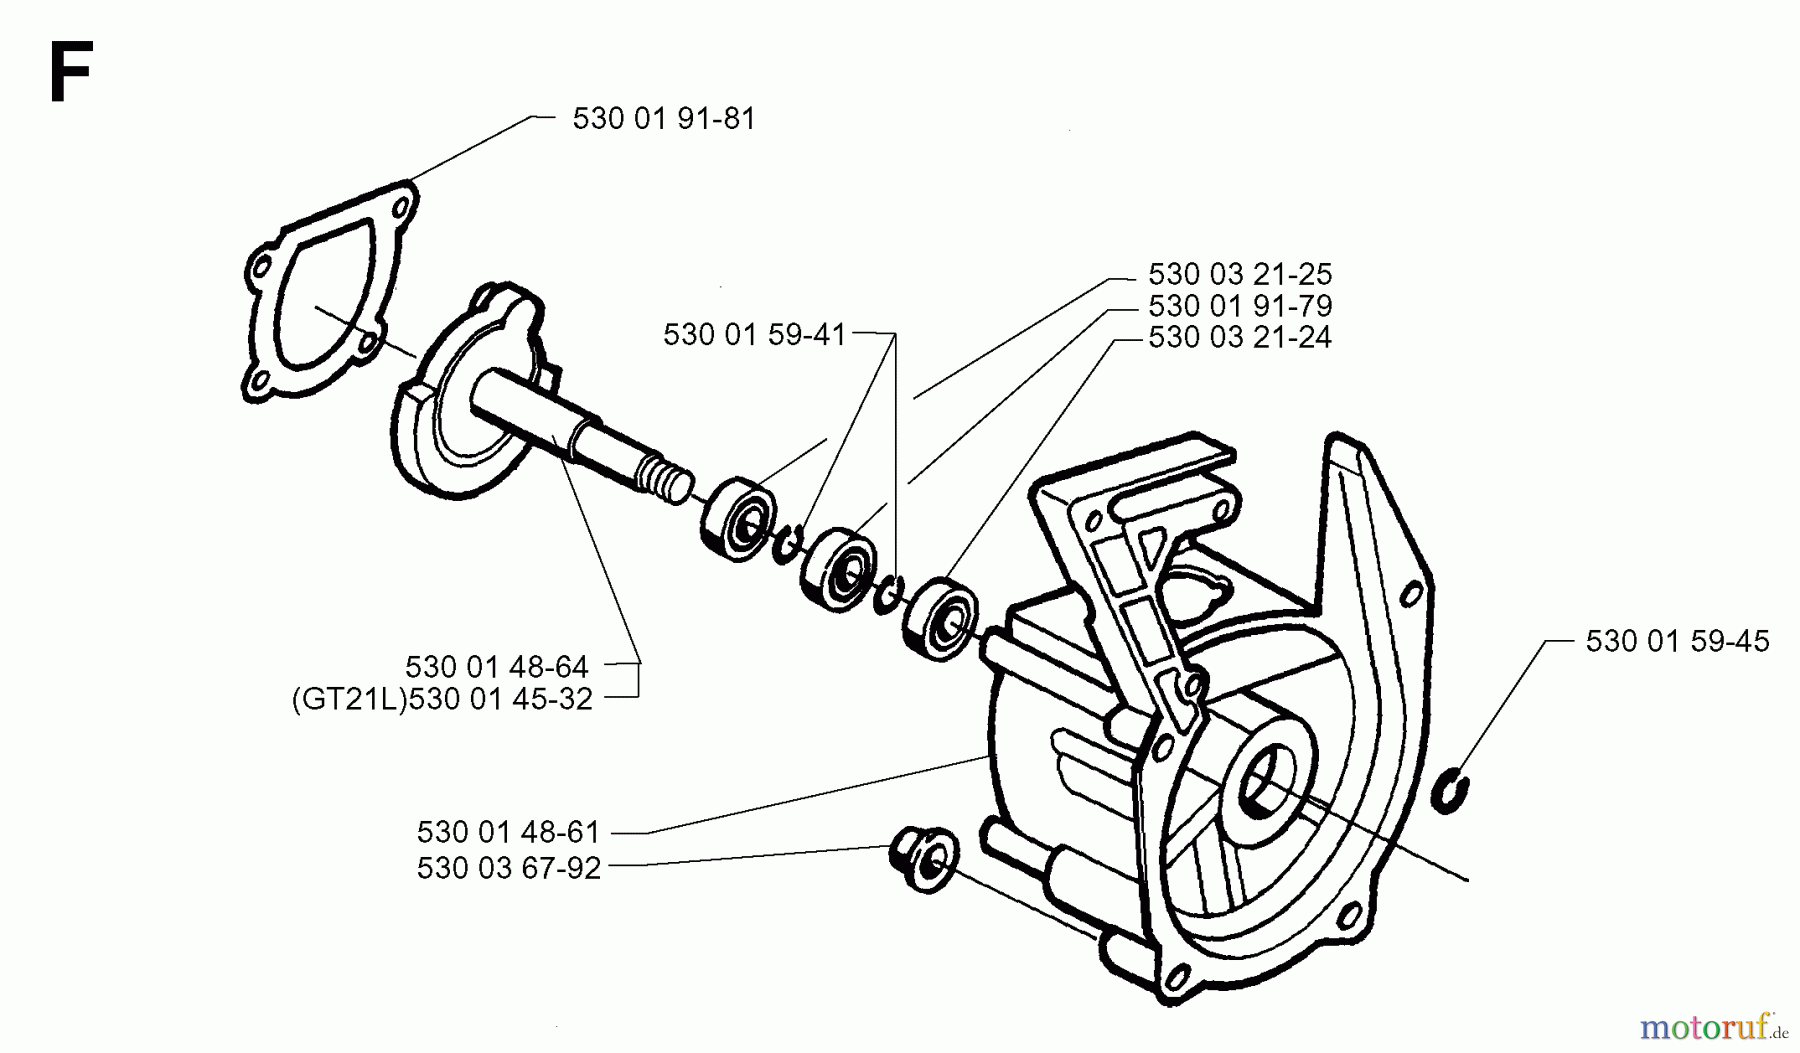  Jonsered Motorsensen, Trimmer GT25 - Jonsered String/Brush Trimmer (1997-05) CRANKCASE #1